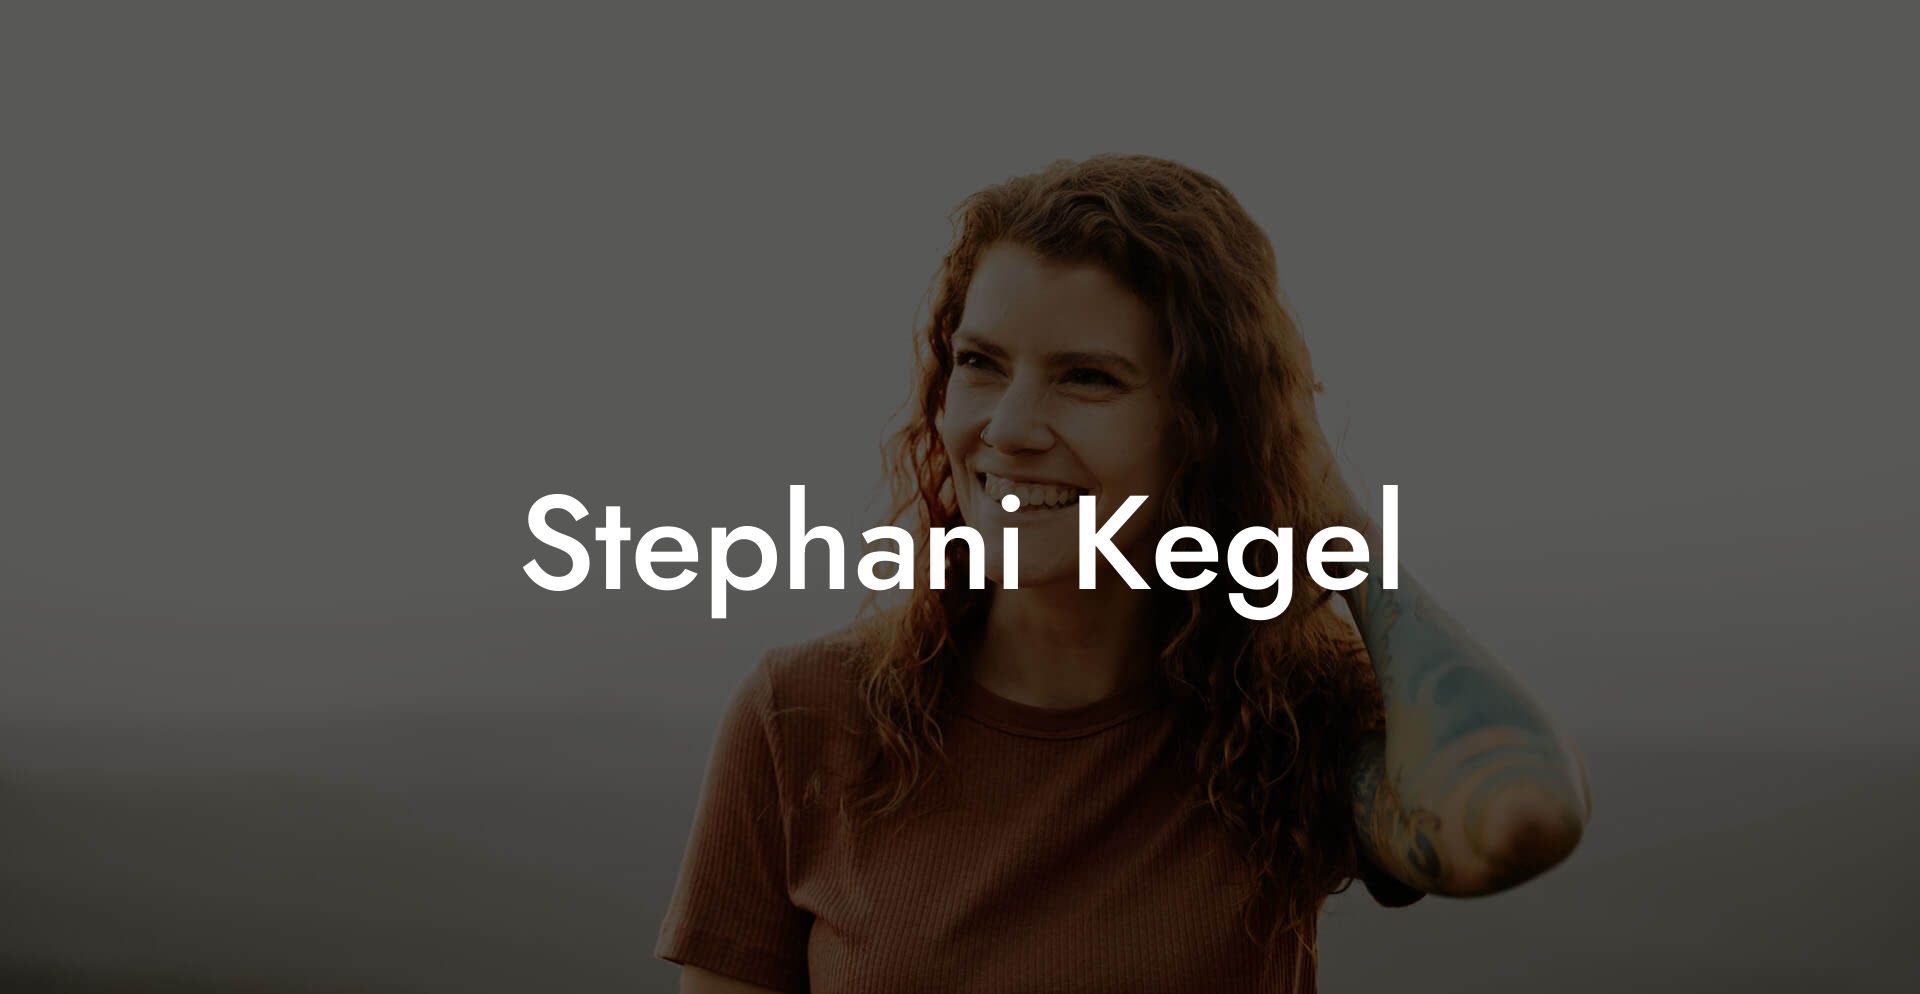 Stephani Kegel